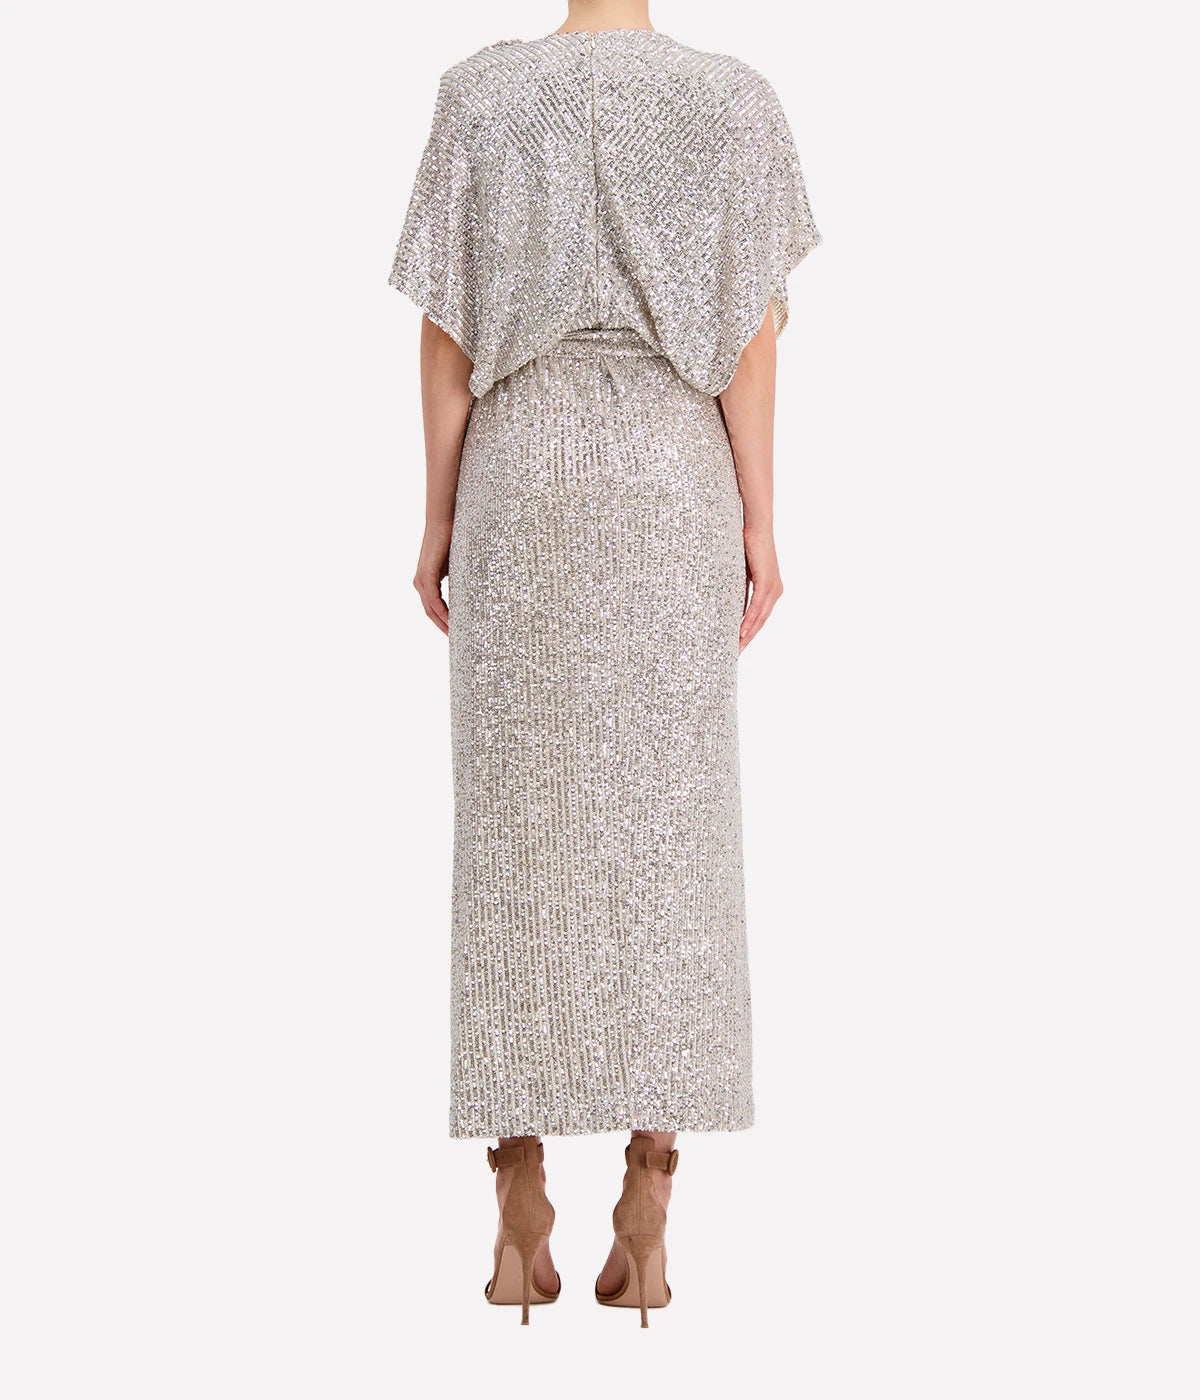 Sequin Madalya Dress in Beige Silver